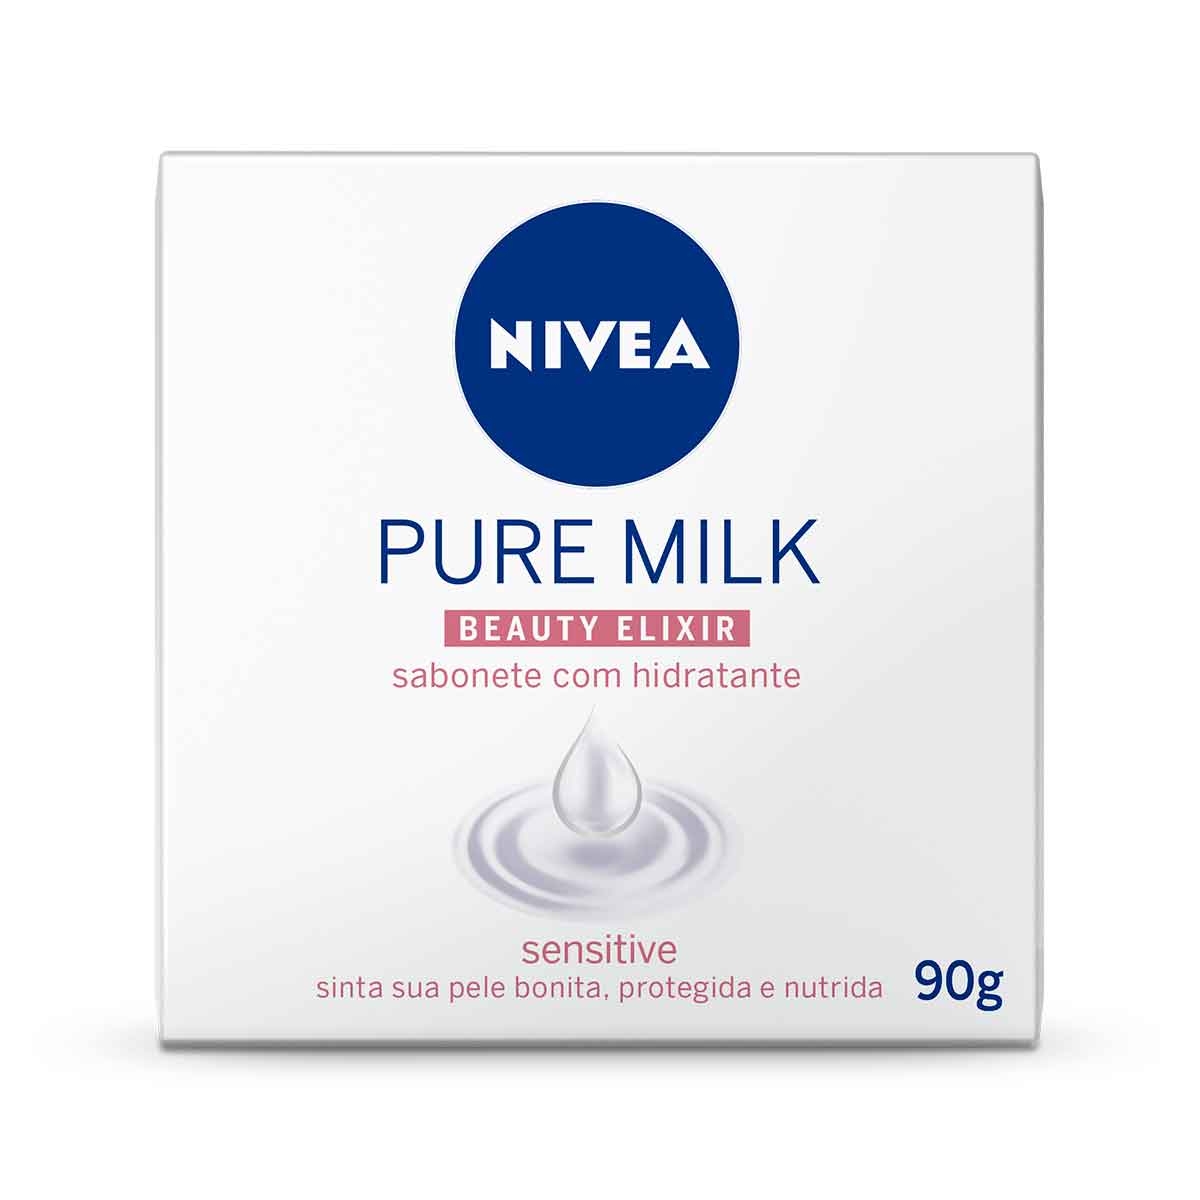 Sabonete em Barra Nivea Pure Milk Sensitive com 90g 90g